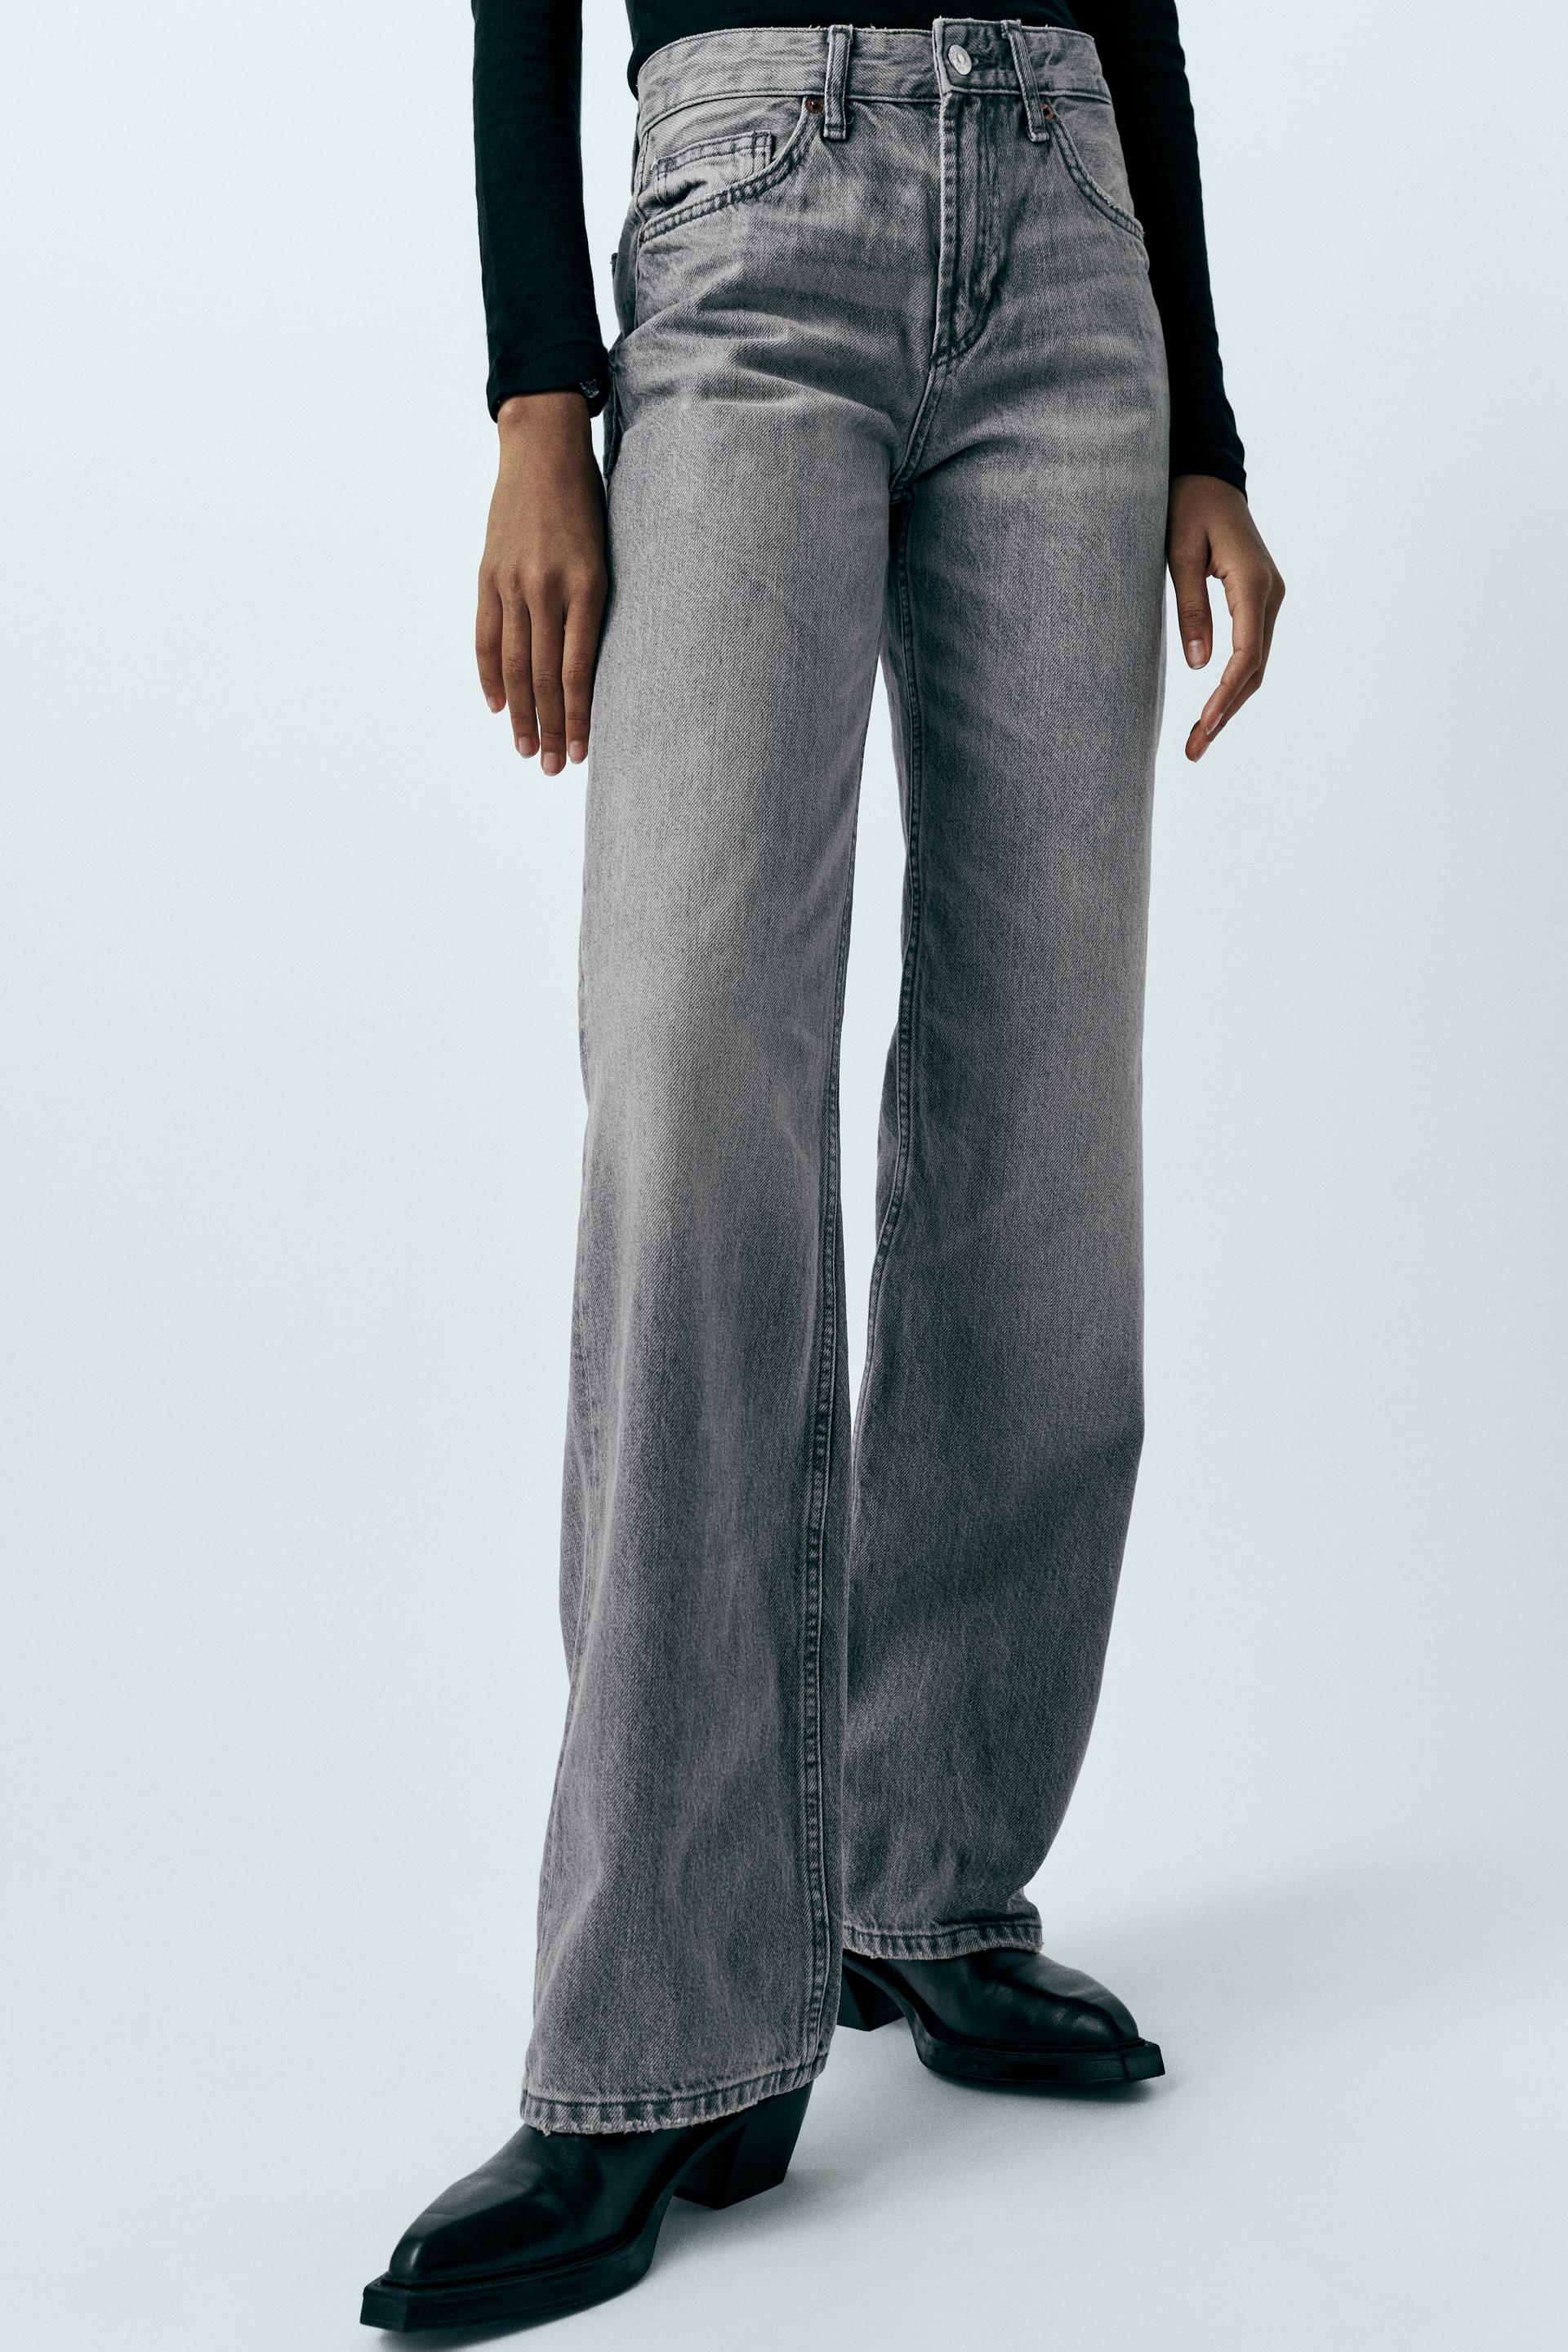 Zara Pink Jeans Loose fit Wide Leg Mid Rise Size UK10 EUR38 US6